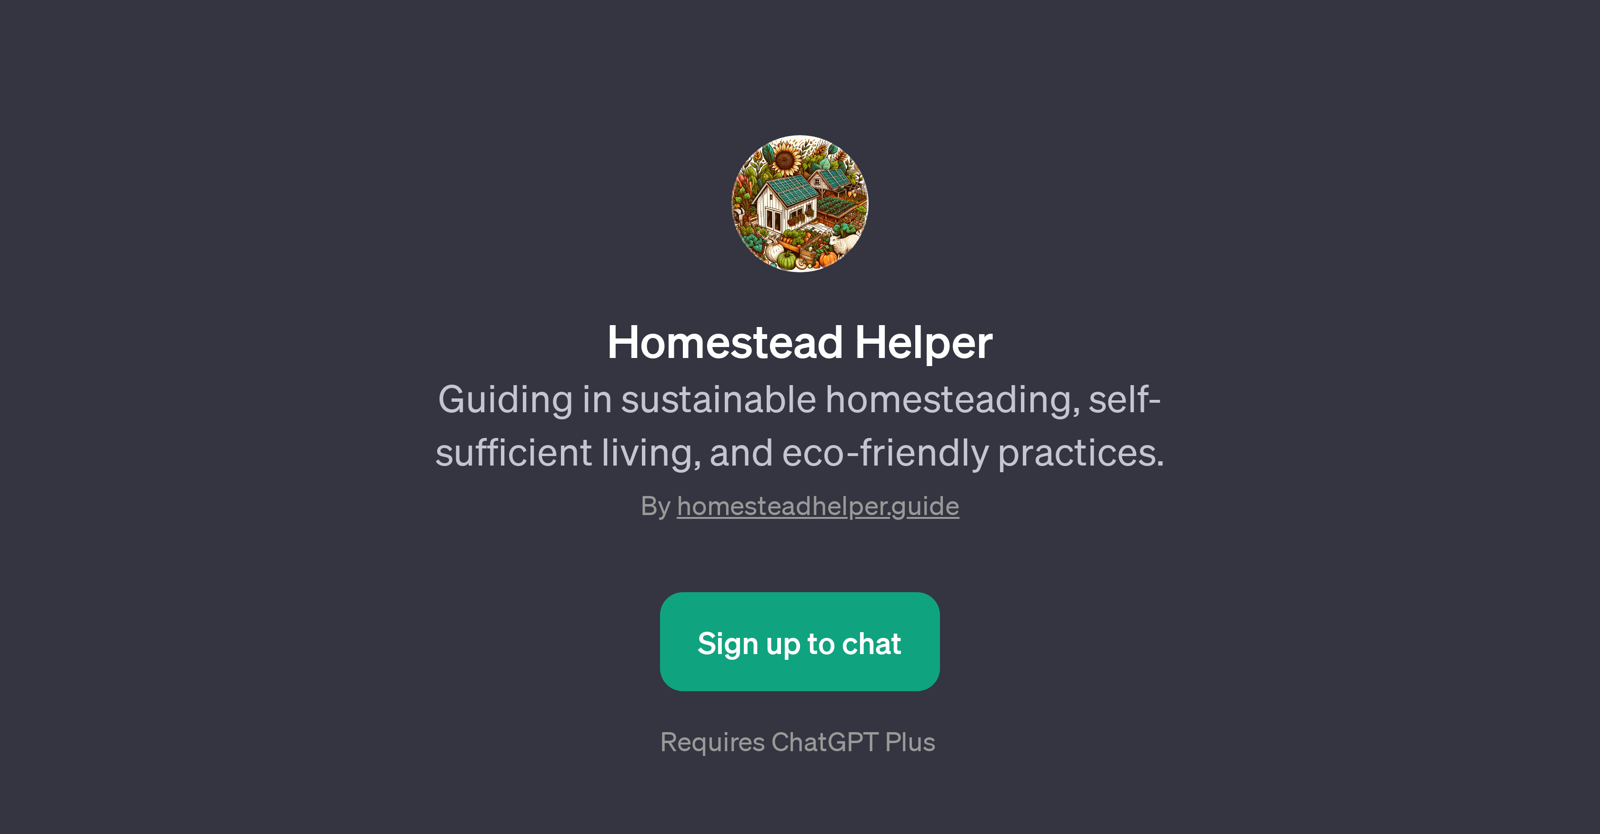 Homestead Helper website